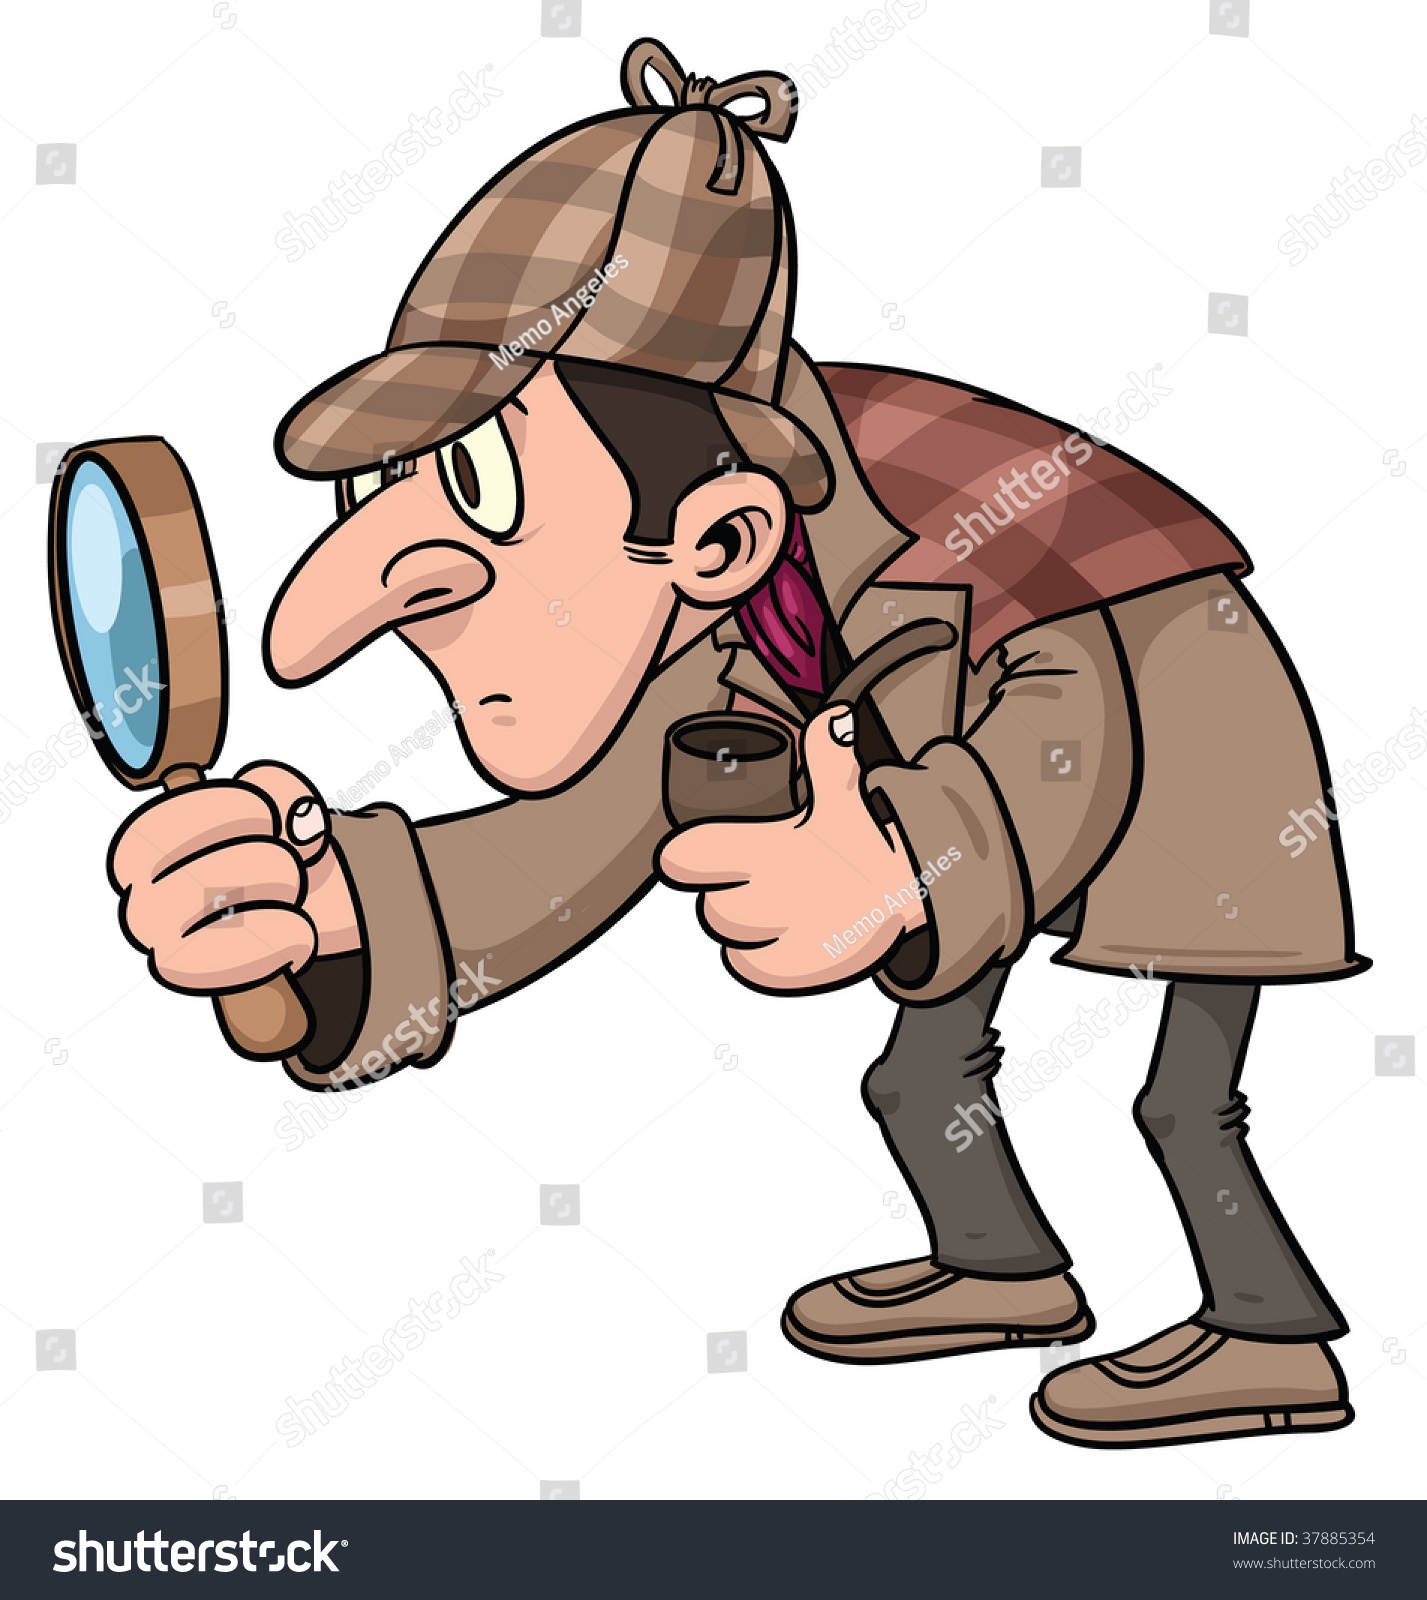 Cartoon Inspector Holding A Magnifying Glass Stock Vector Illustration 37885354 Shutterstock